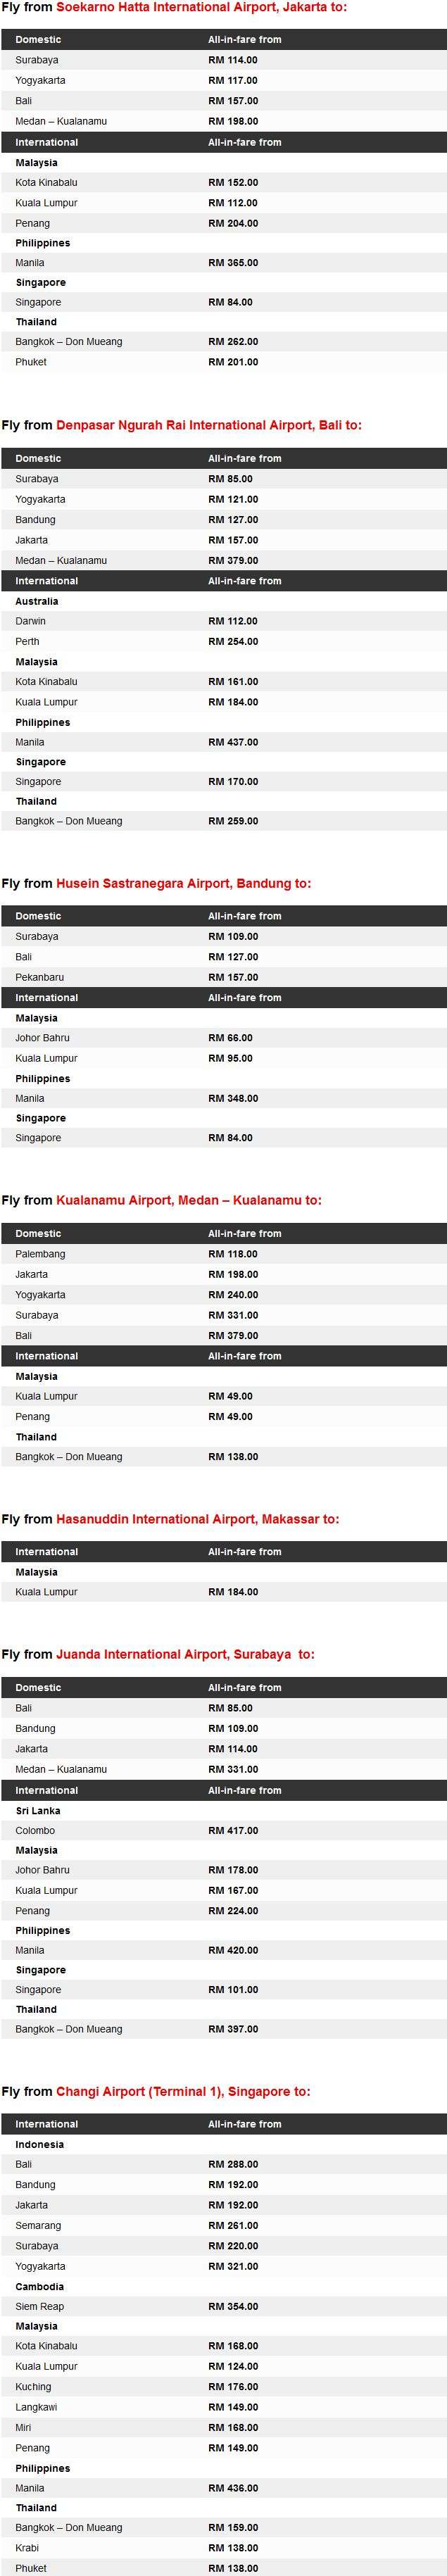 AirAsia Fly-Thru Low Fares Details